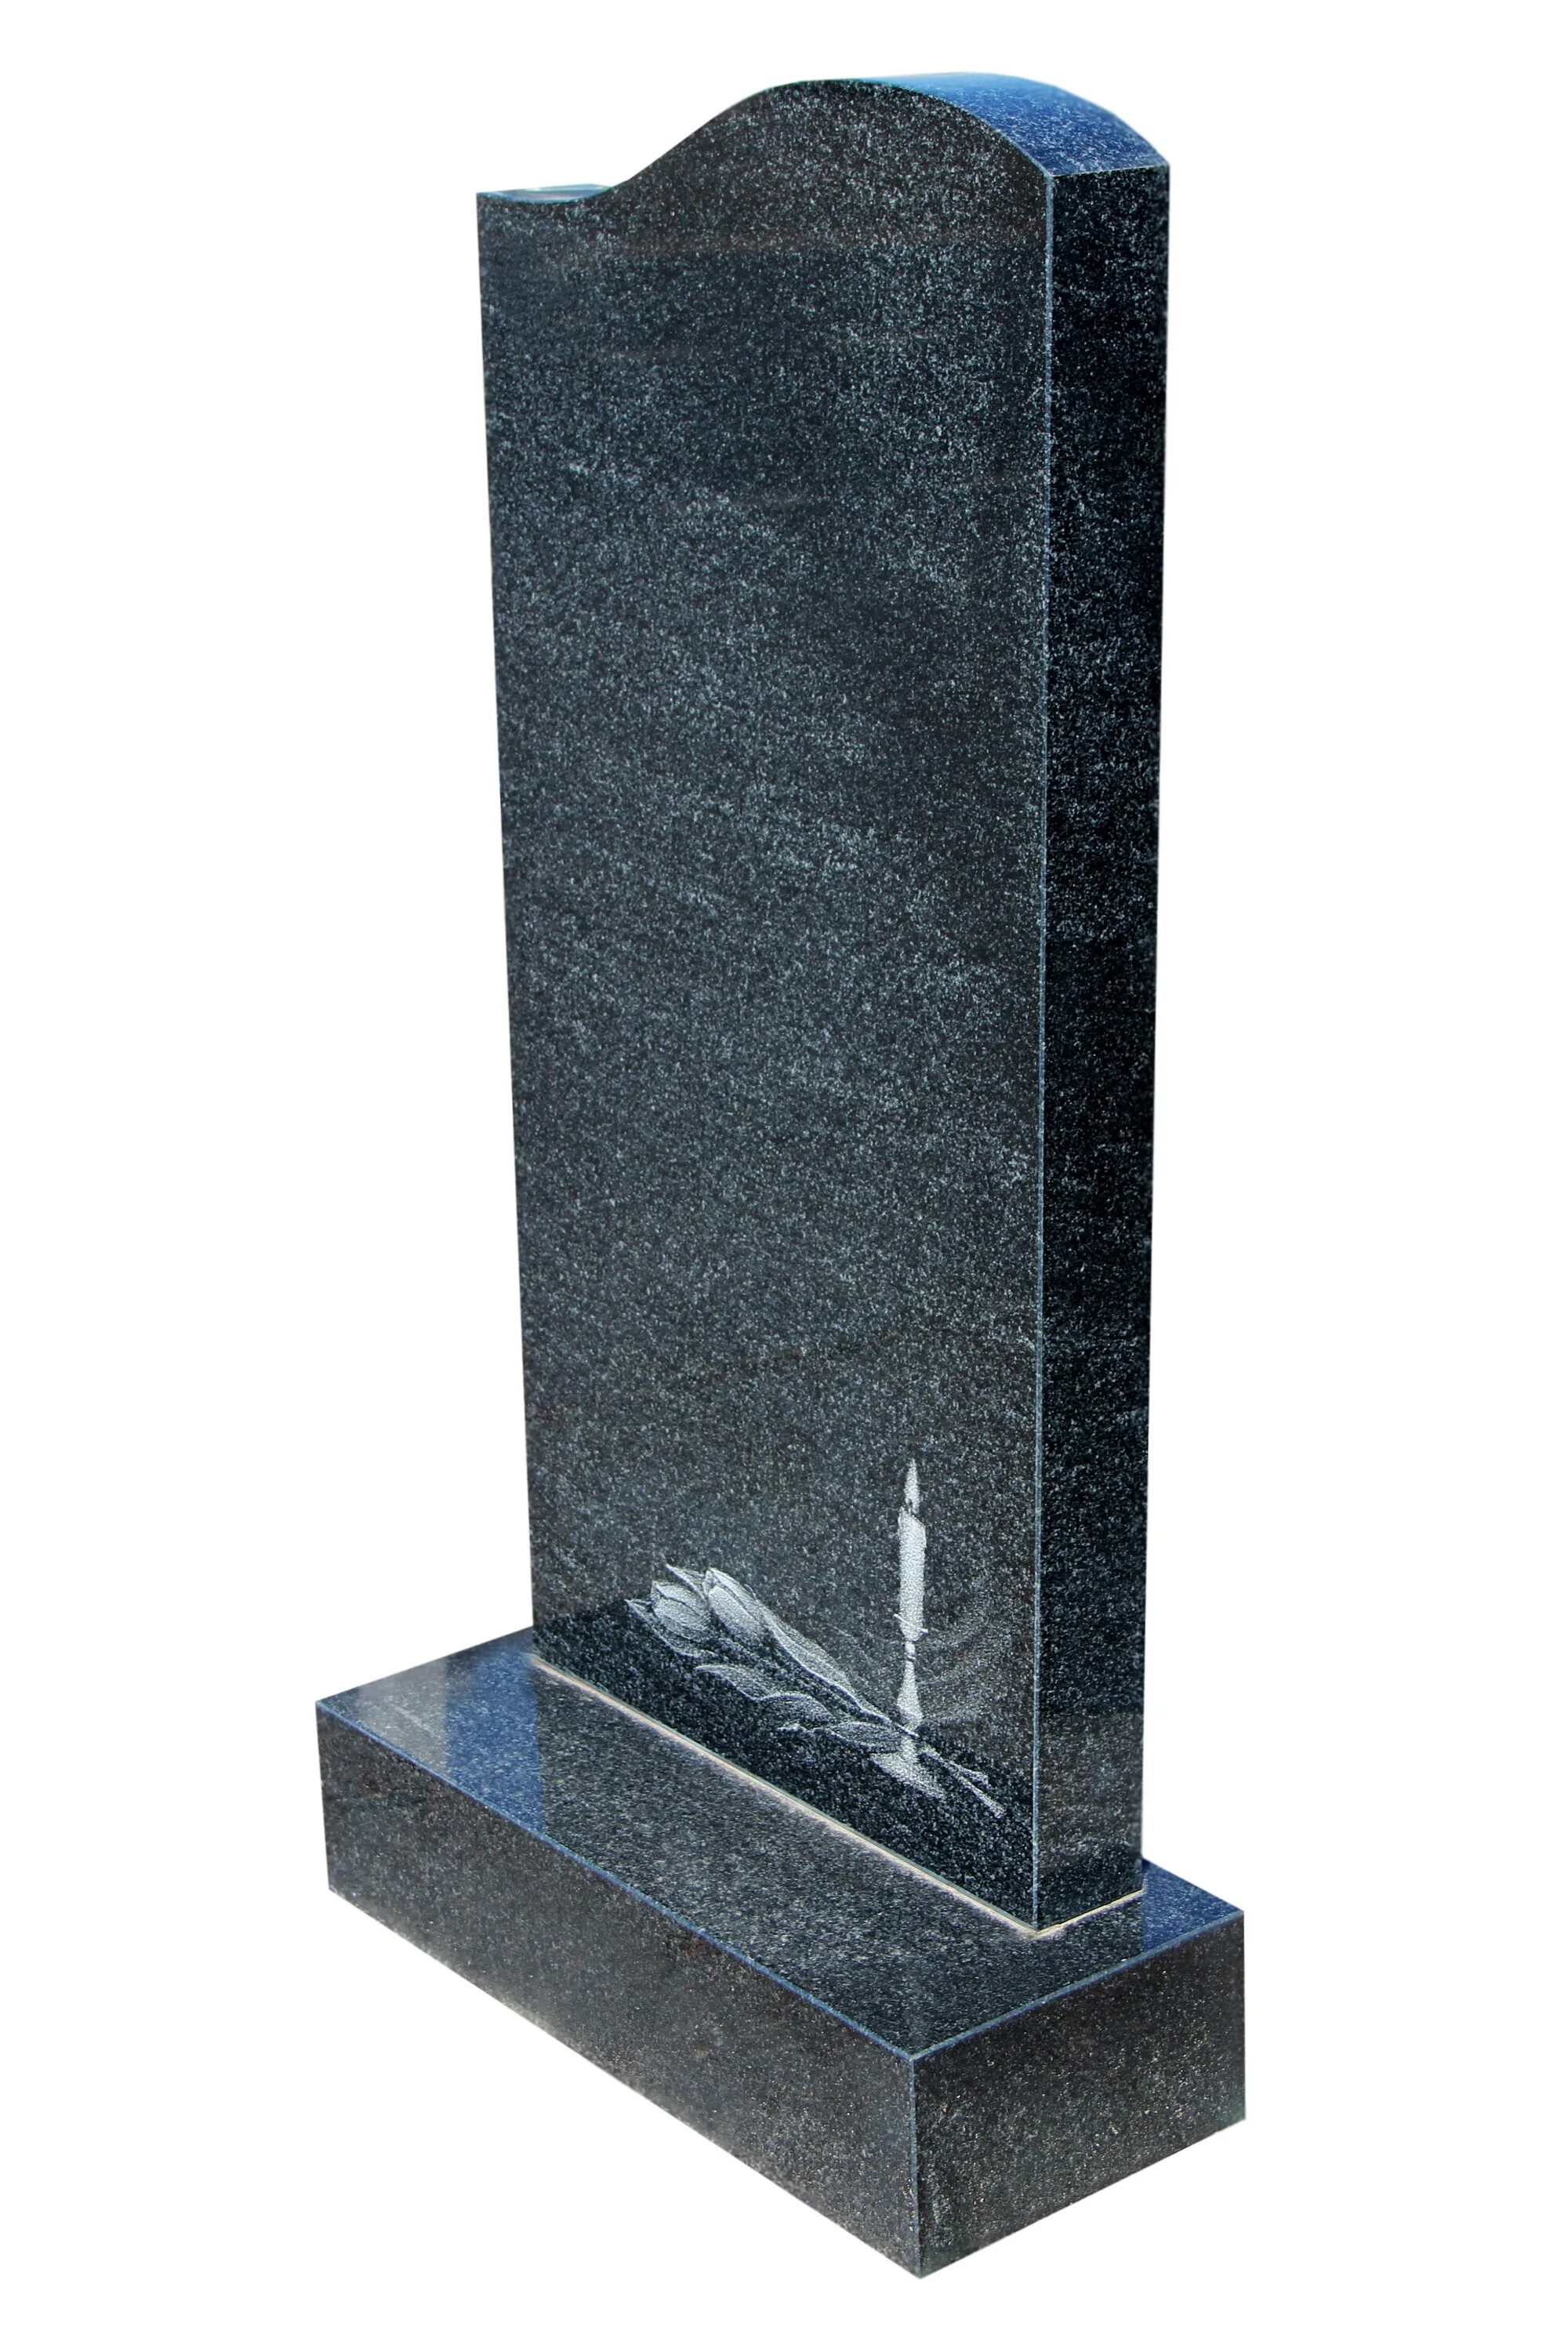 Памятники на могилу из гранита цены москва